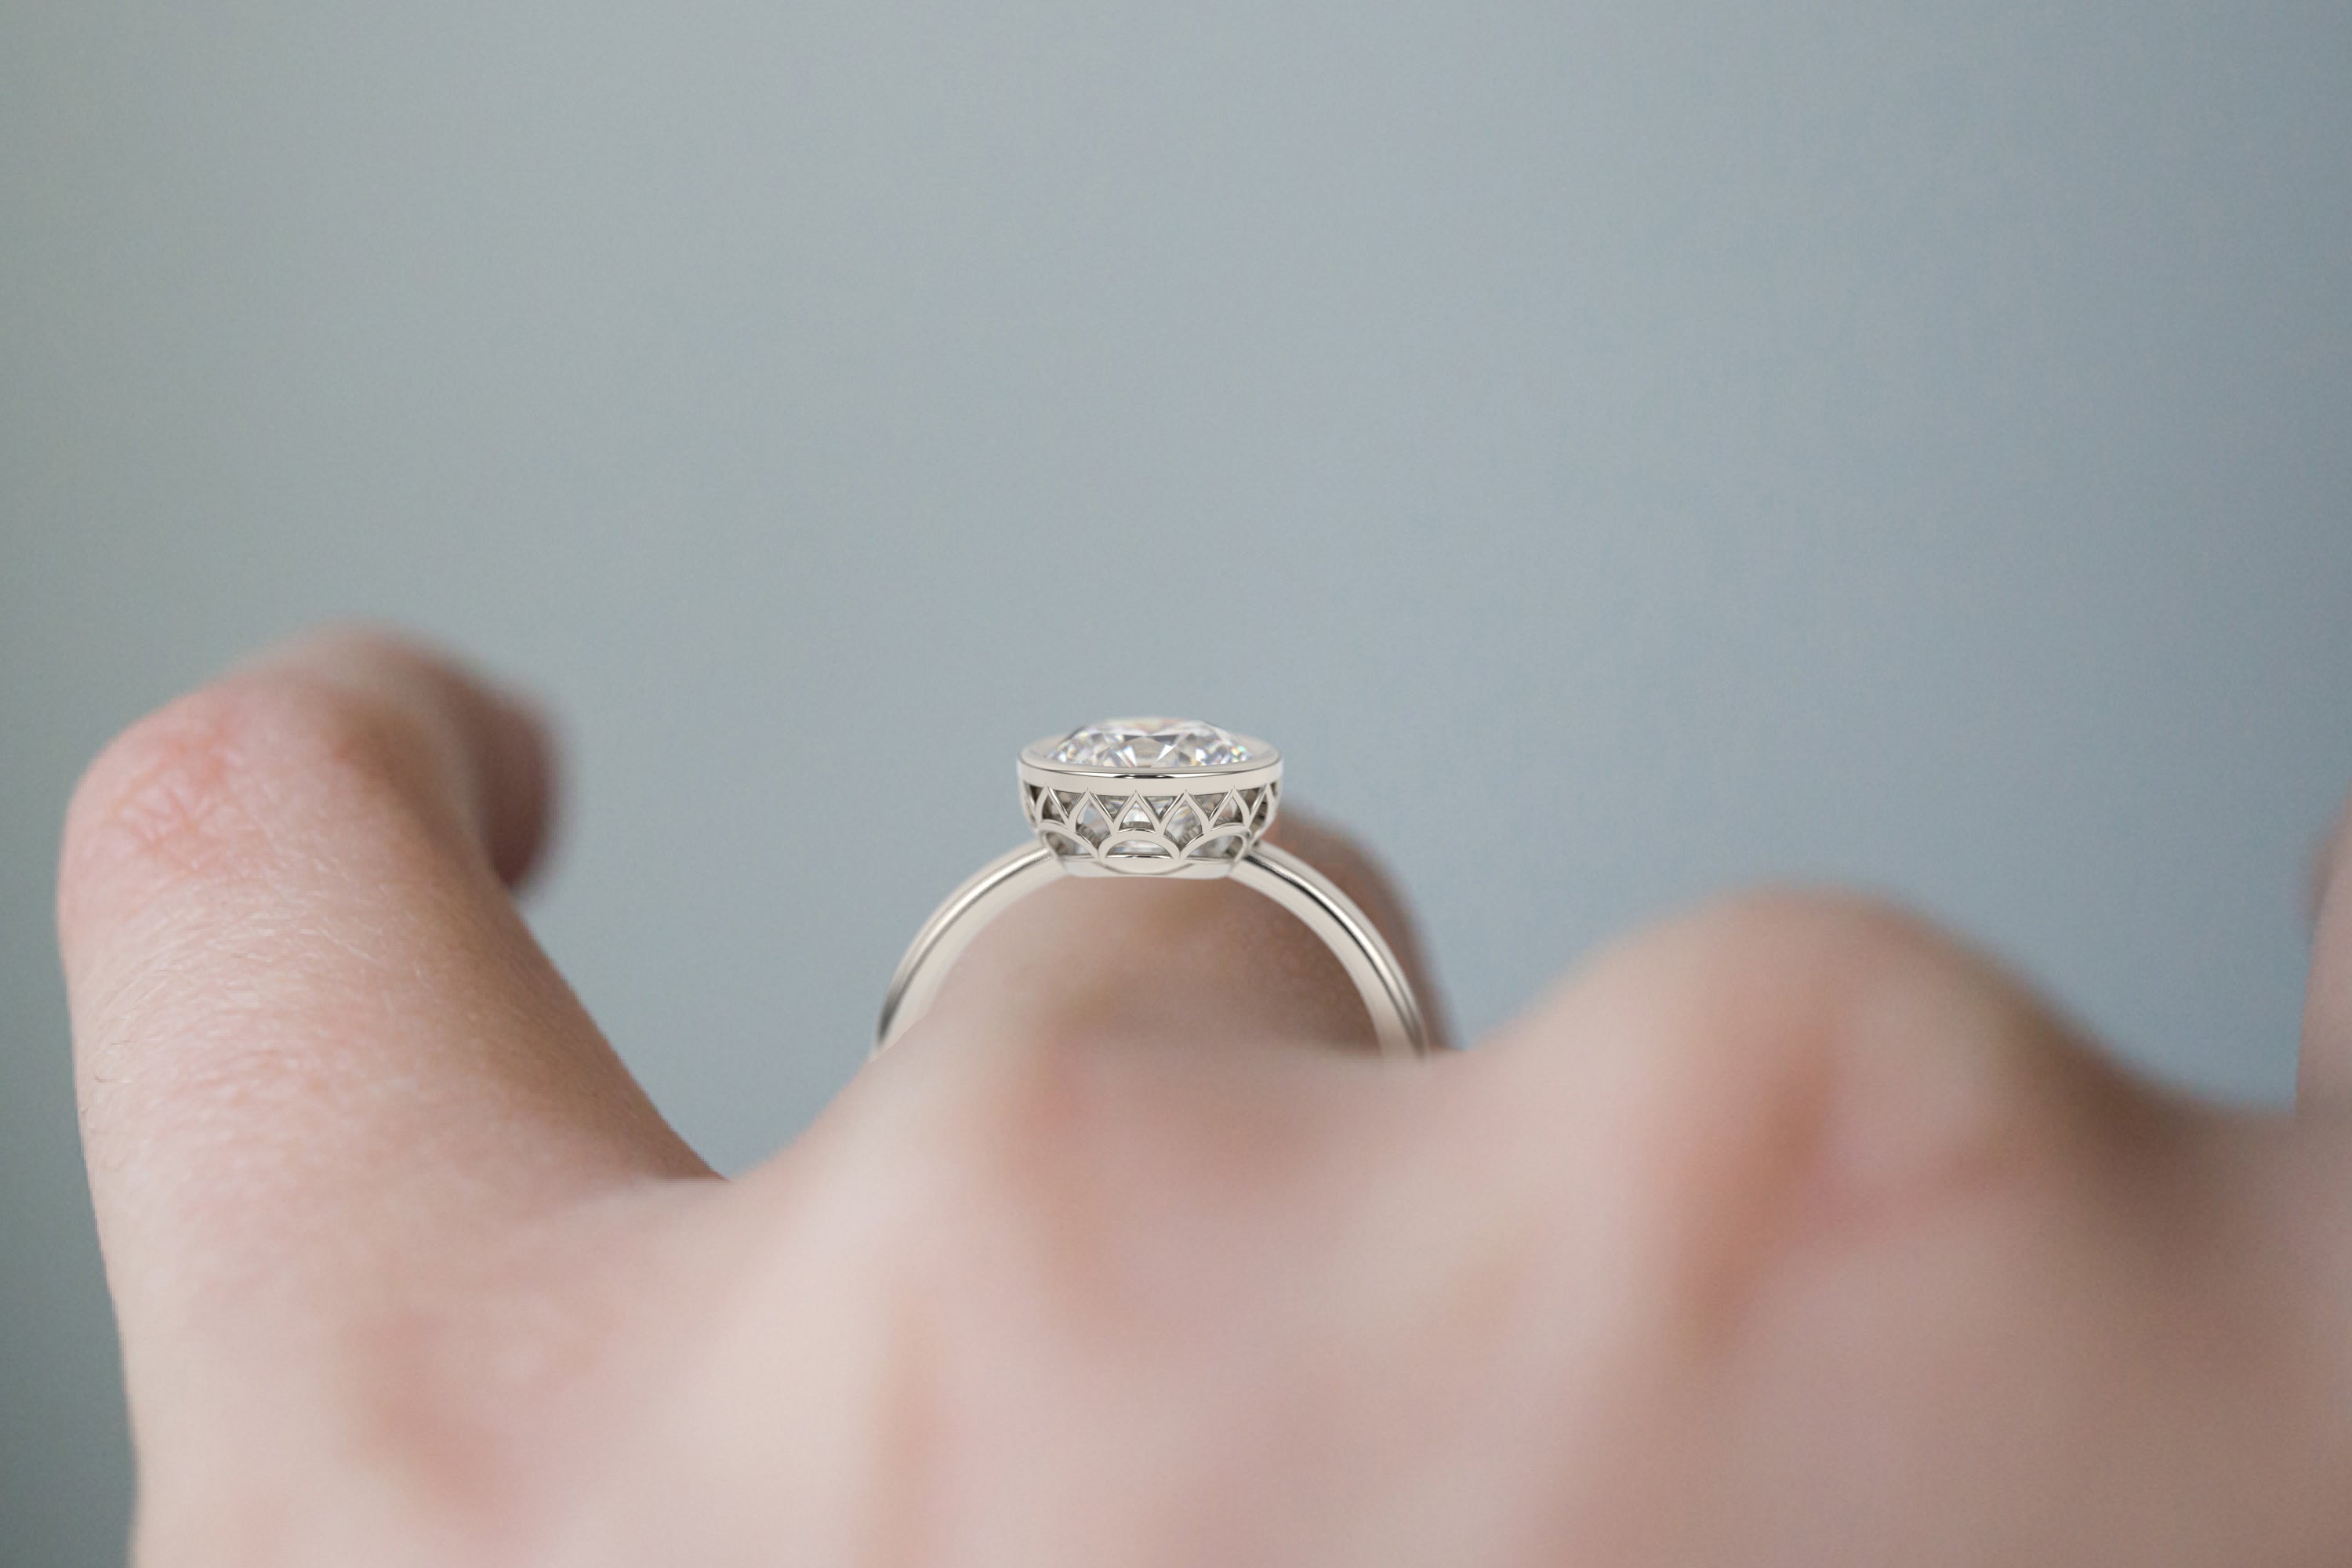 Alternative Hexagon Engagement Ring Antique Step Cut Diamond Wedding Ring  at Rs 46790.25 | हीरे की सगाई की अंगूठी in Surat | ID: 26077462673